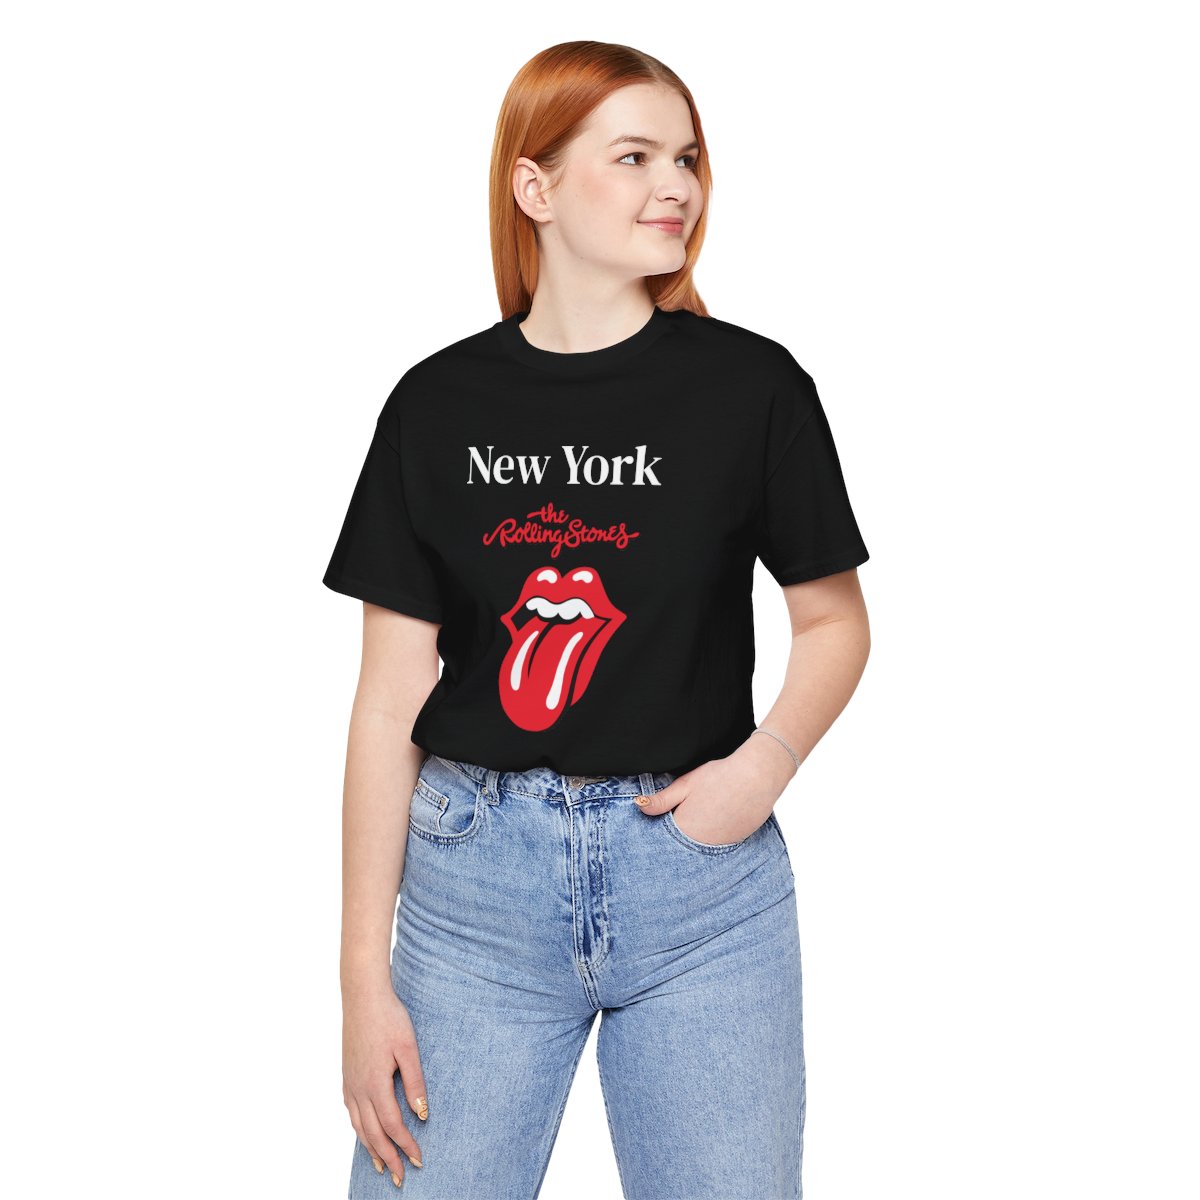 RollingStones NEW YORK Tee Shirt product thumbnail image